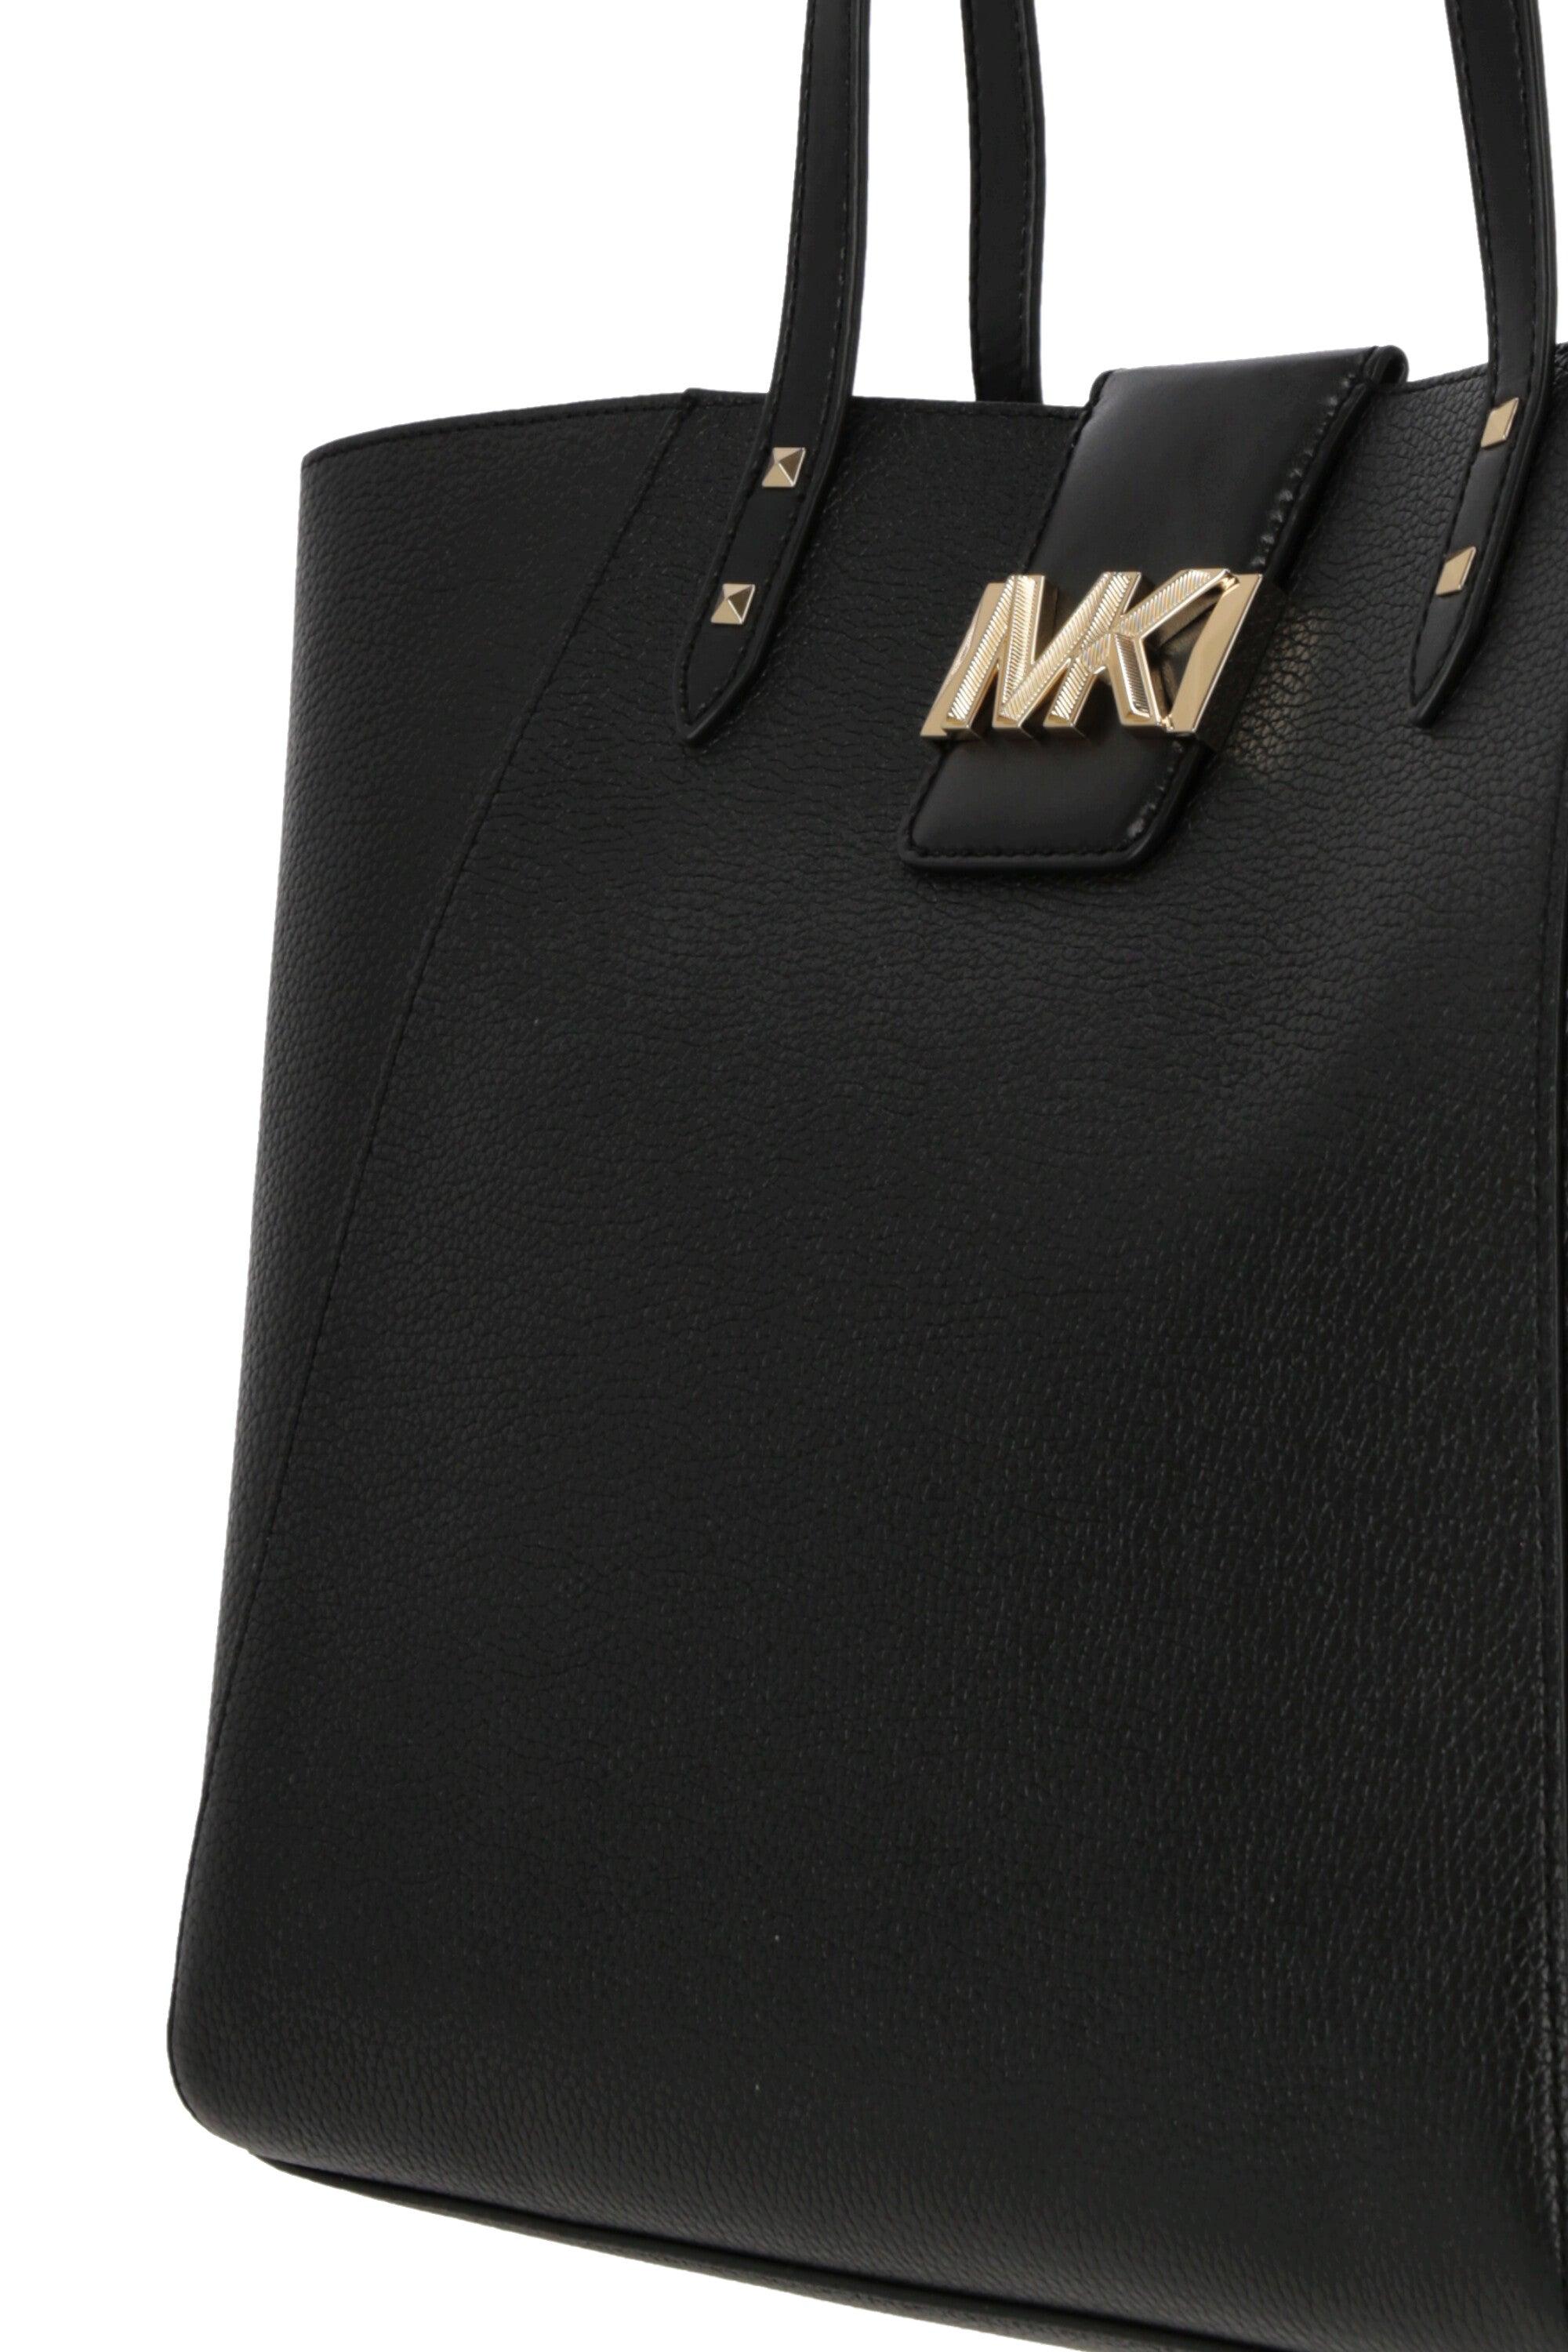 Michael Kors Rose Ladies Karlie Small Leather Crossbody Bag